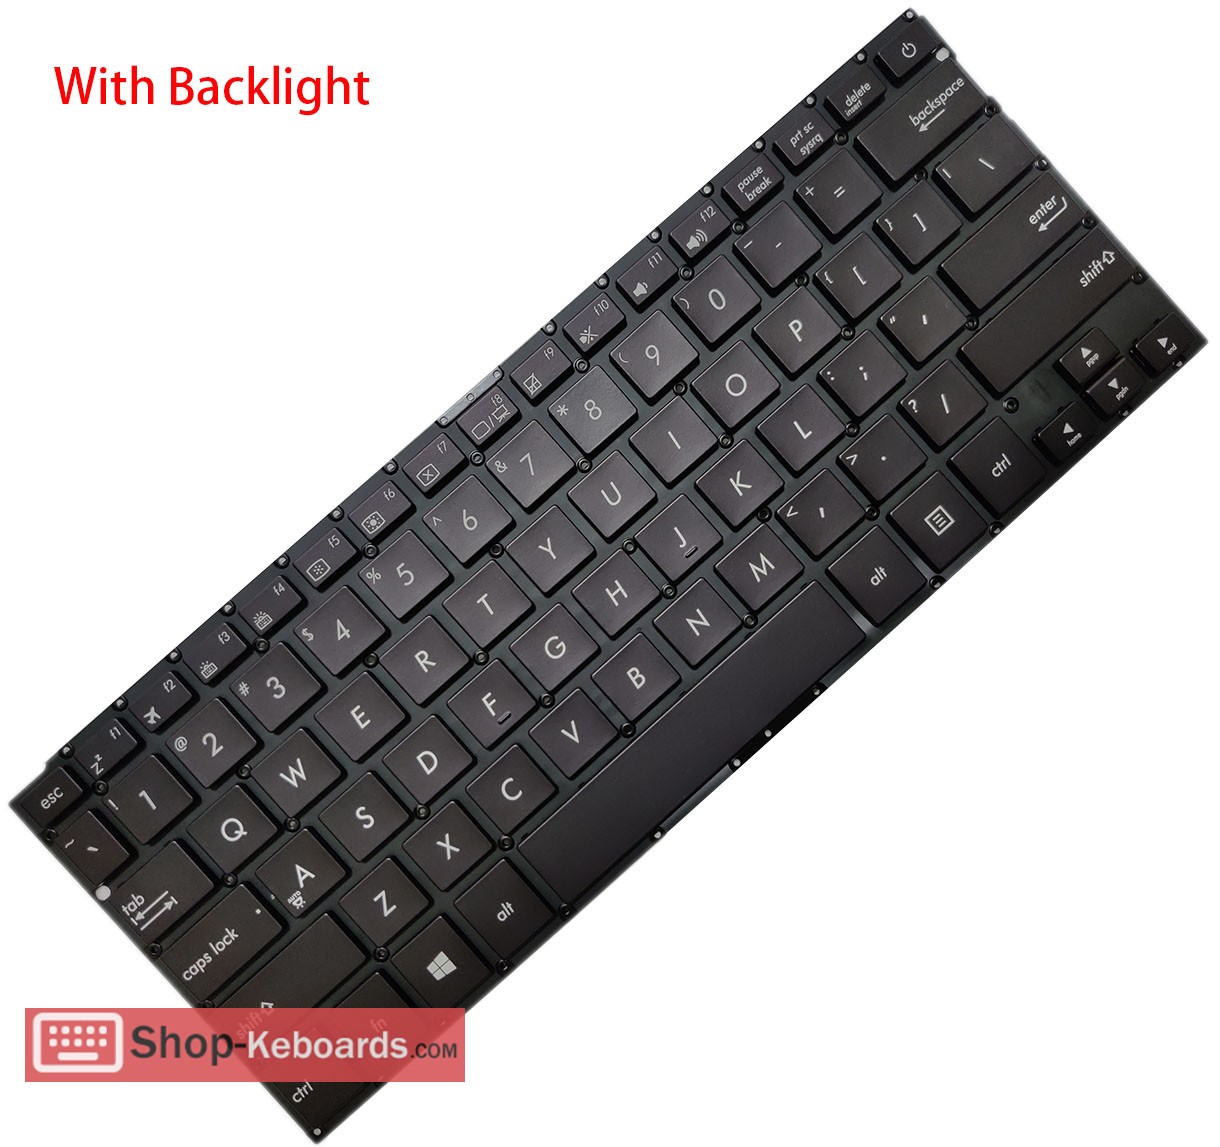 Asus ZENBOOK UX410UQ-GV054T  Keyboard replacement